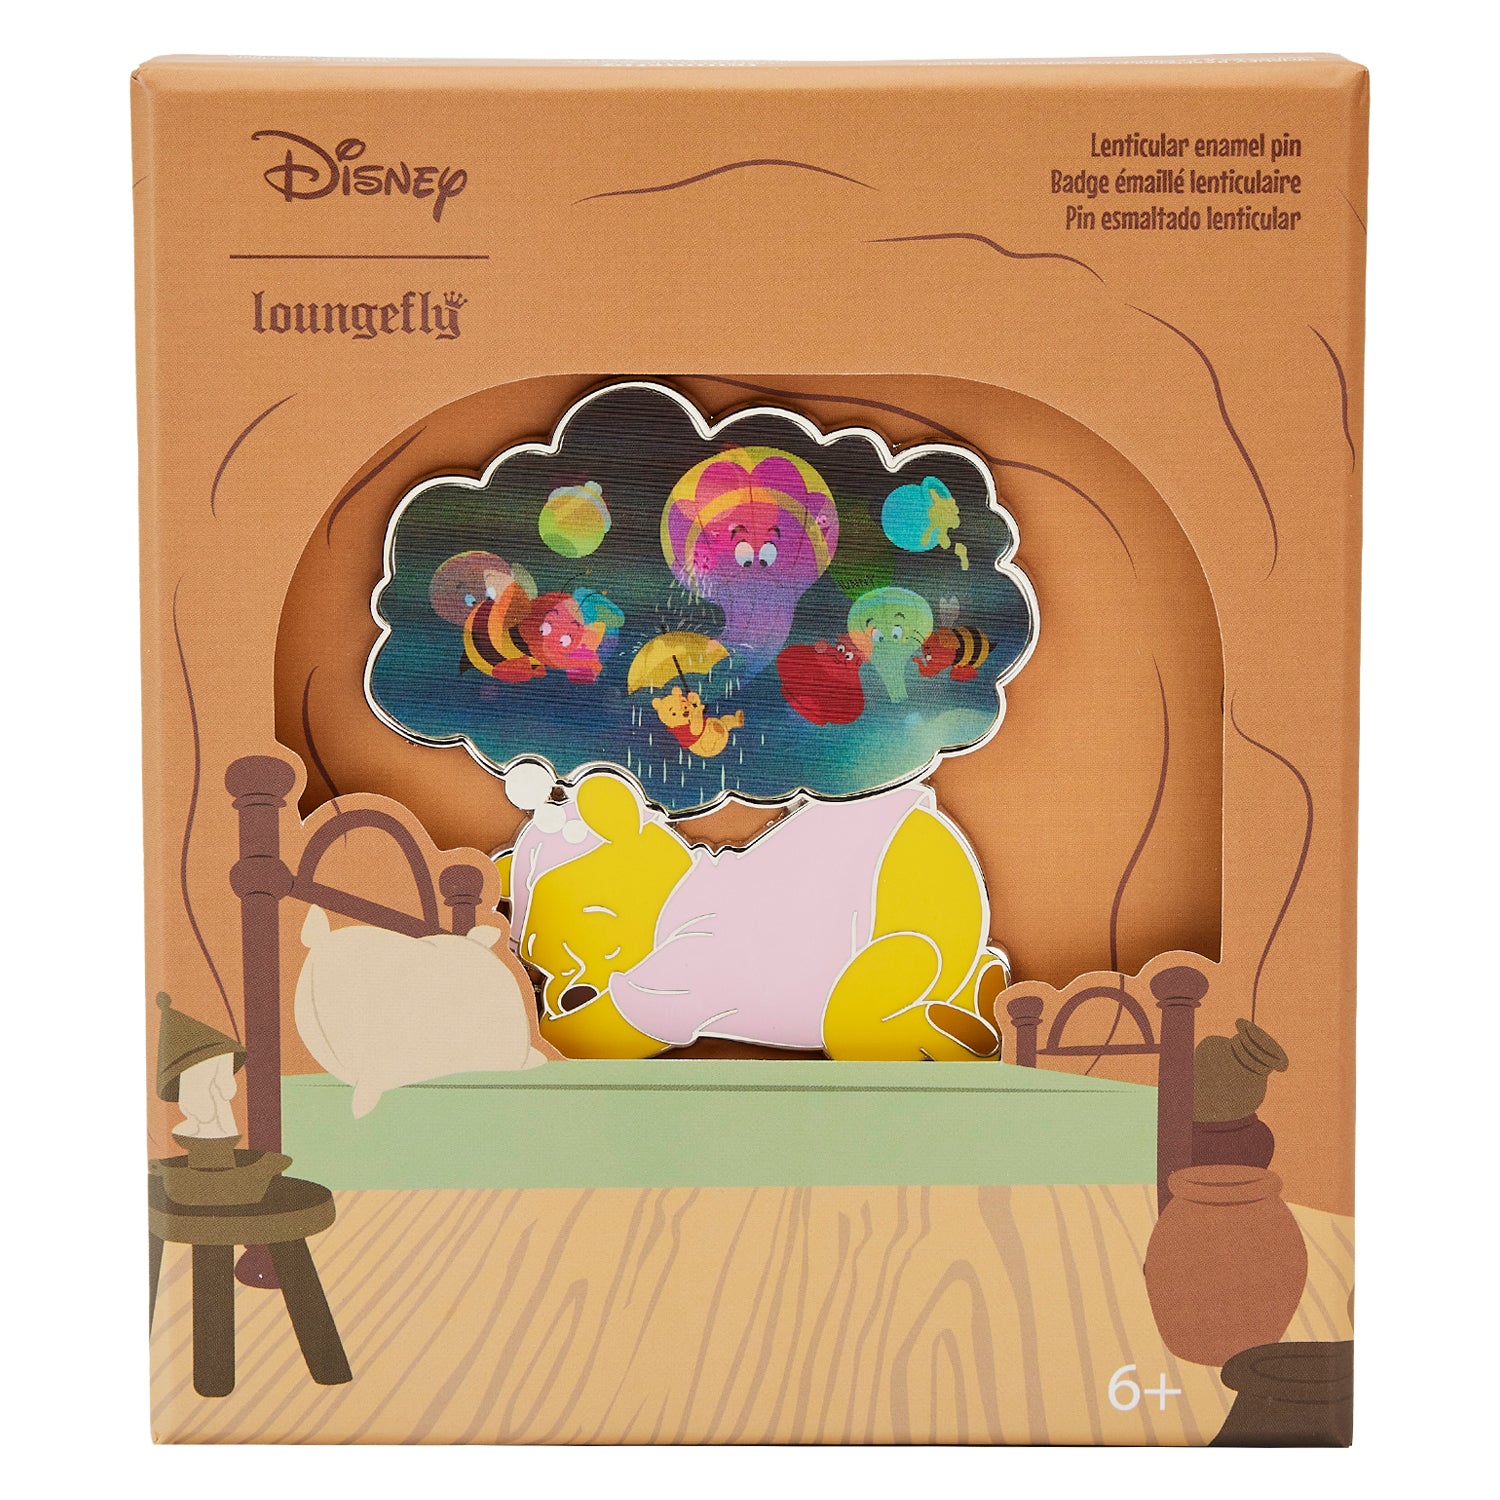 Loungefly Disney Sleeping Beauty Lenticular 3 Inch Pin